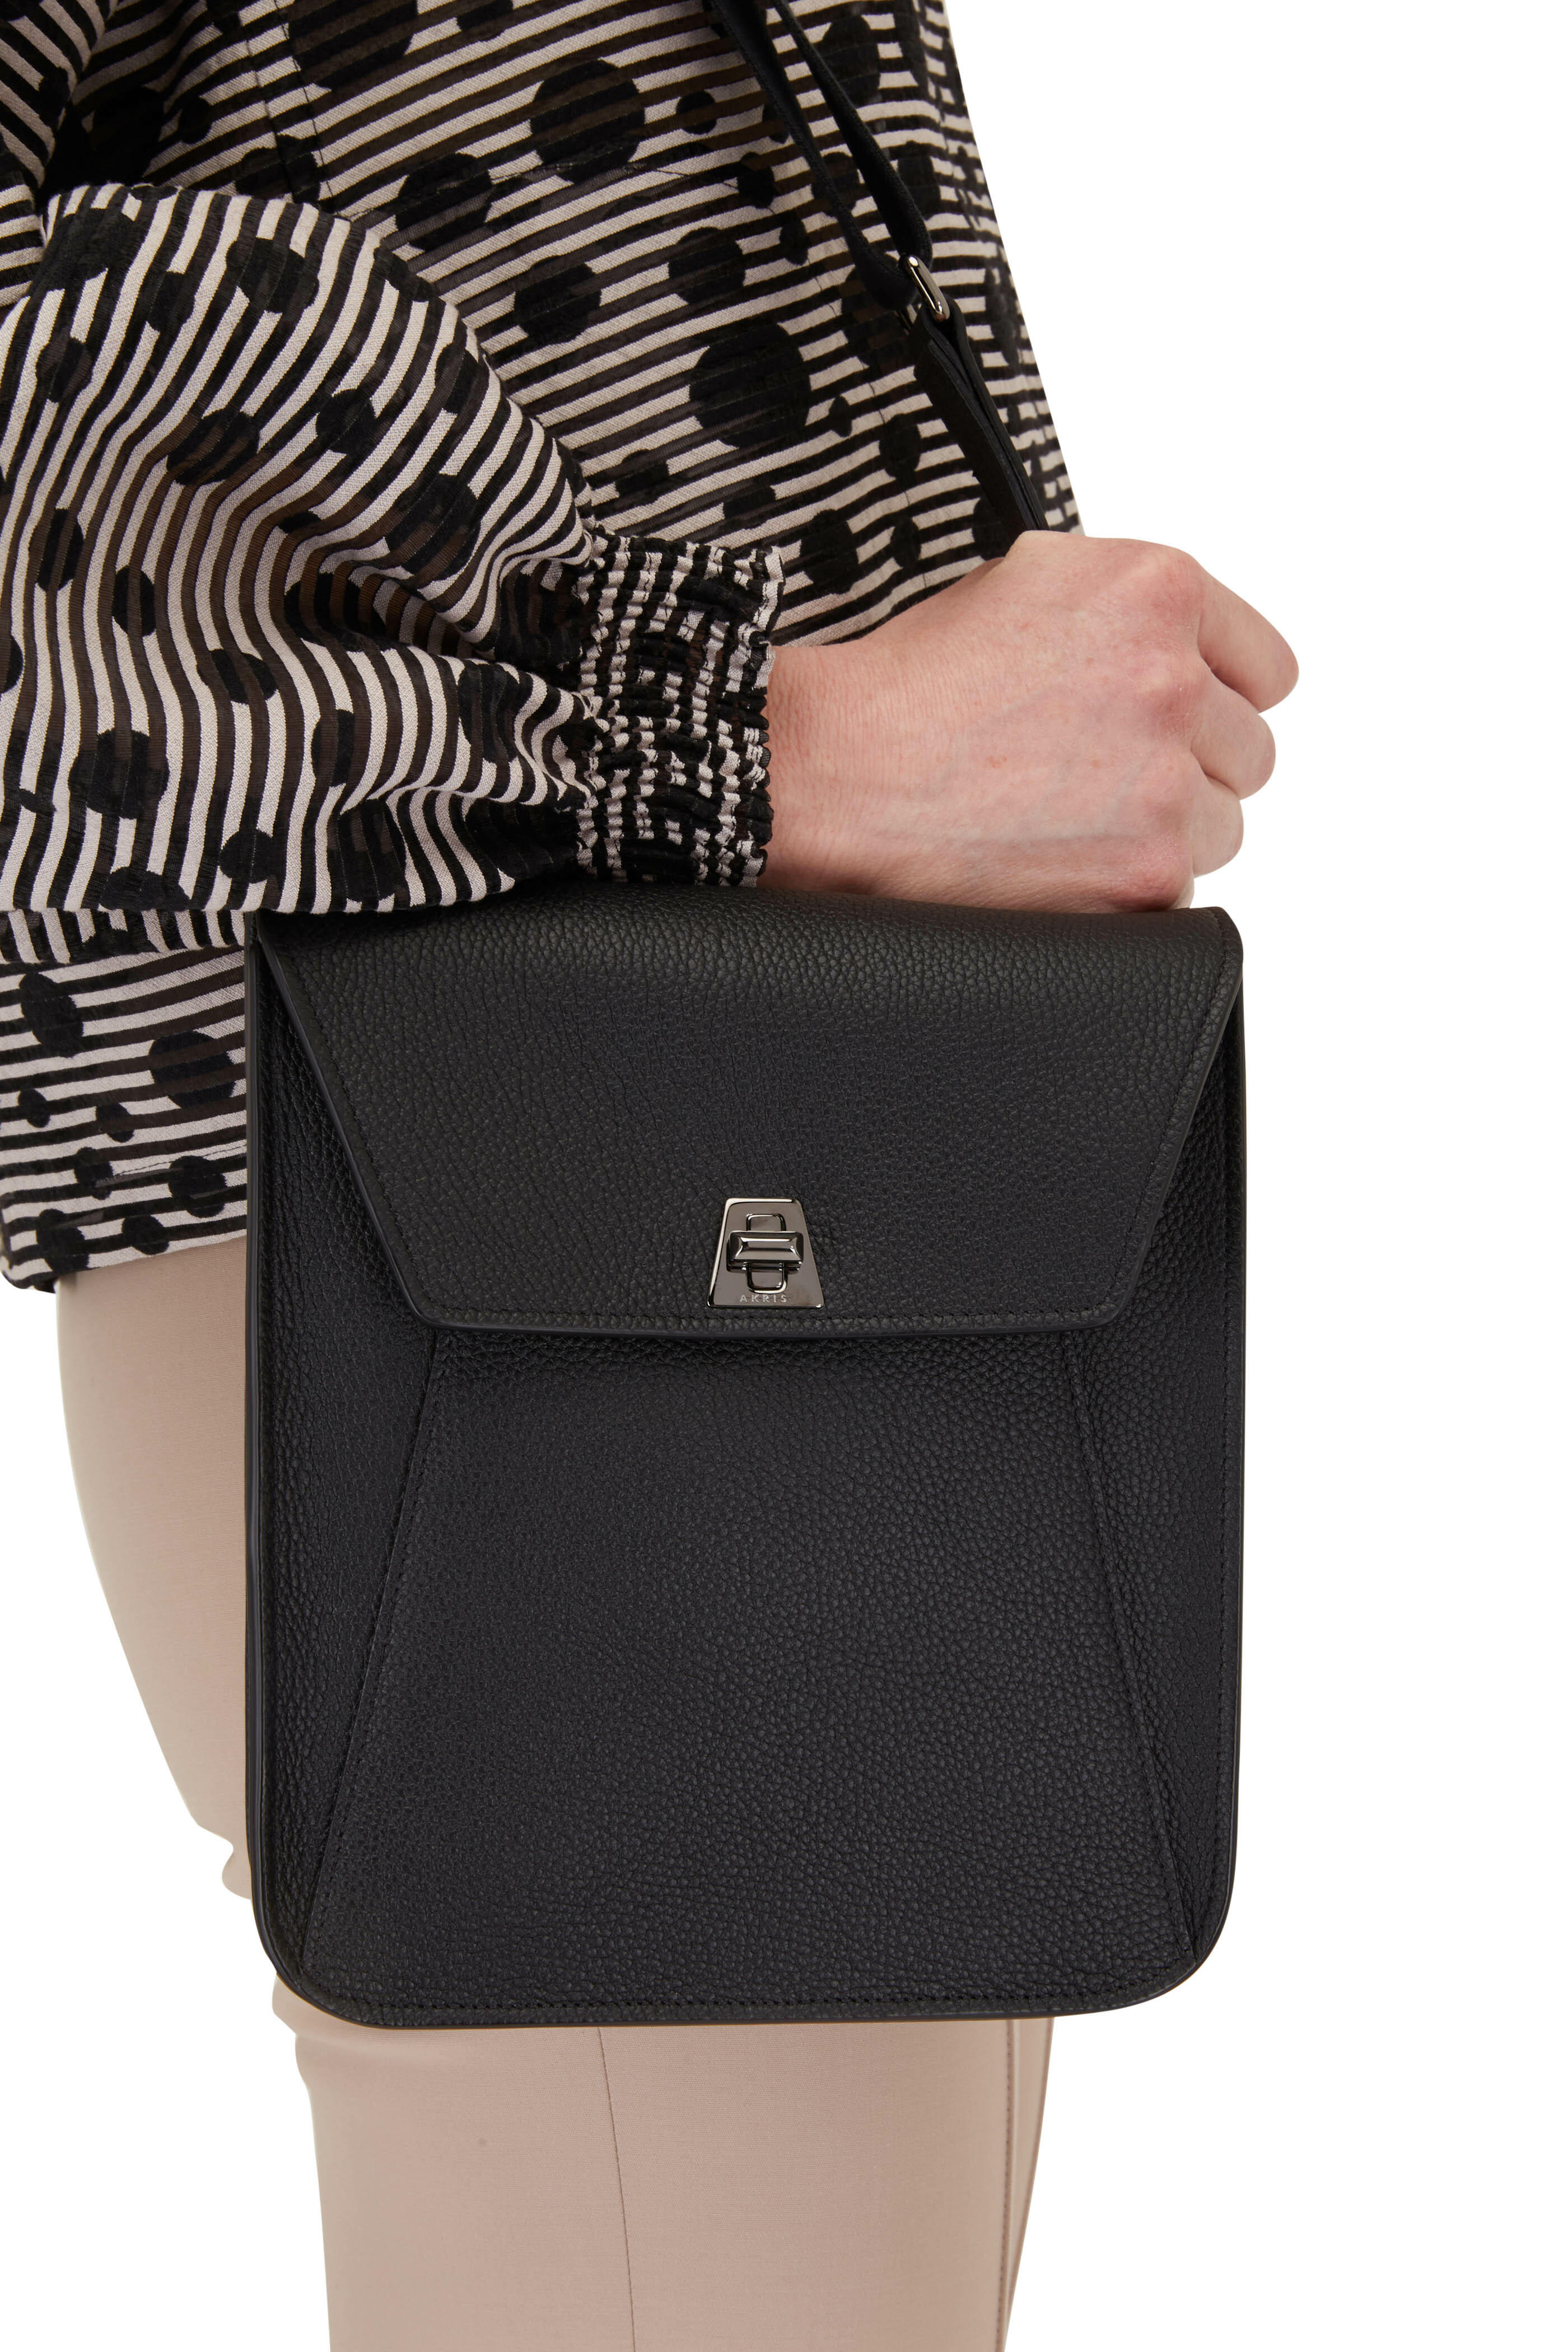 Akris Women's Small Anouk Leather Messenger Bag - Black